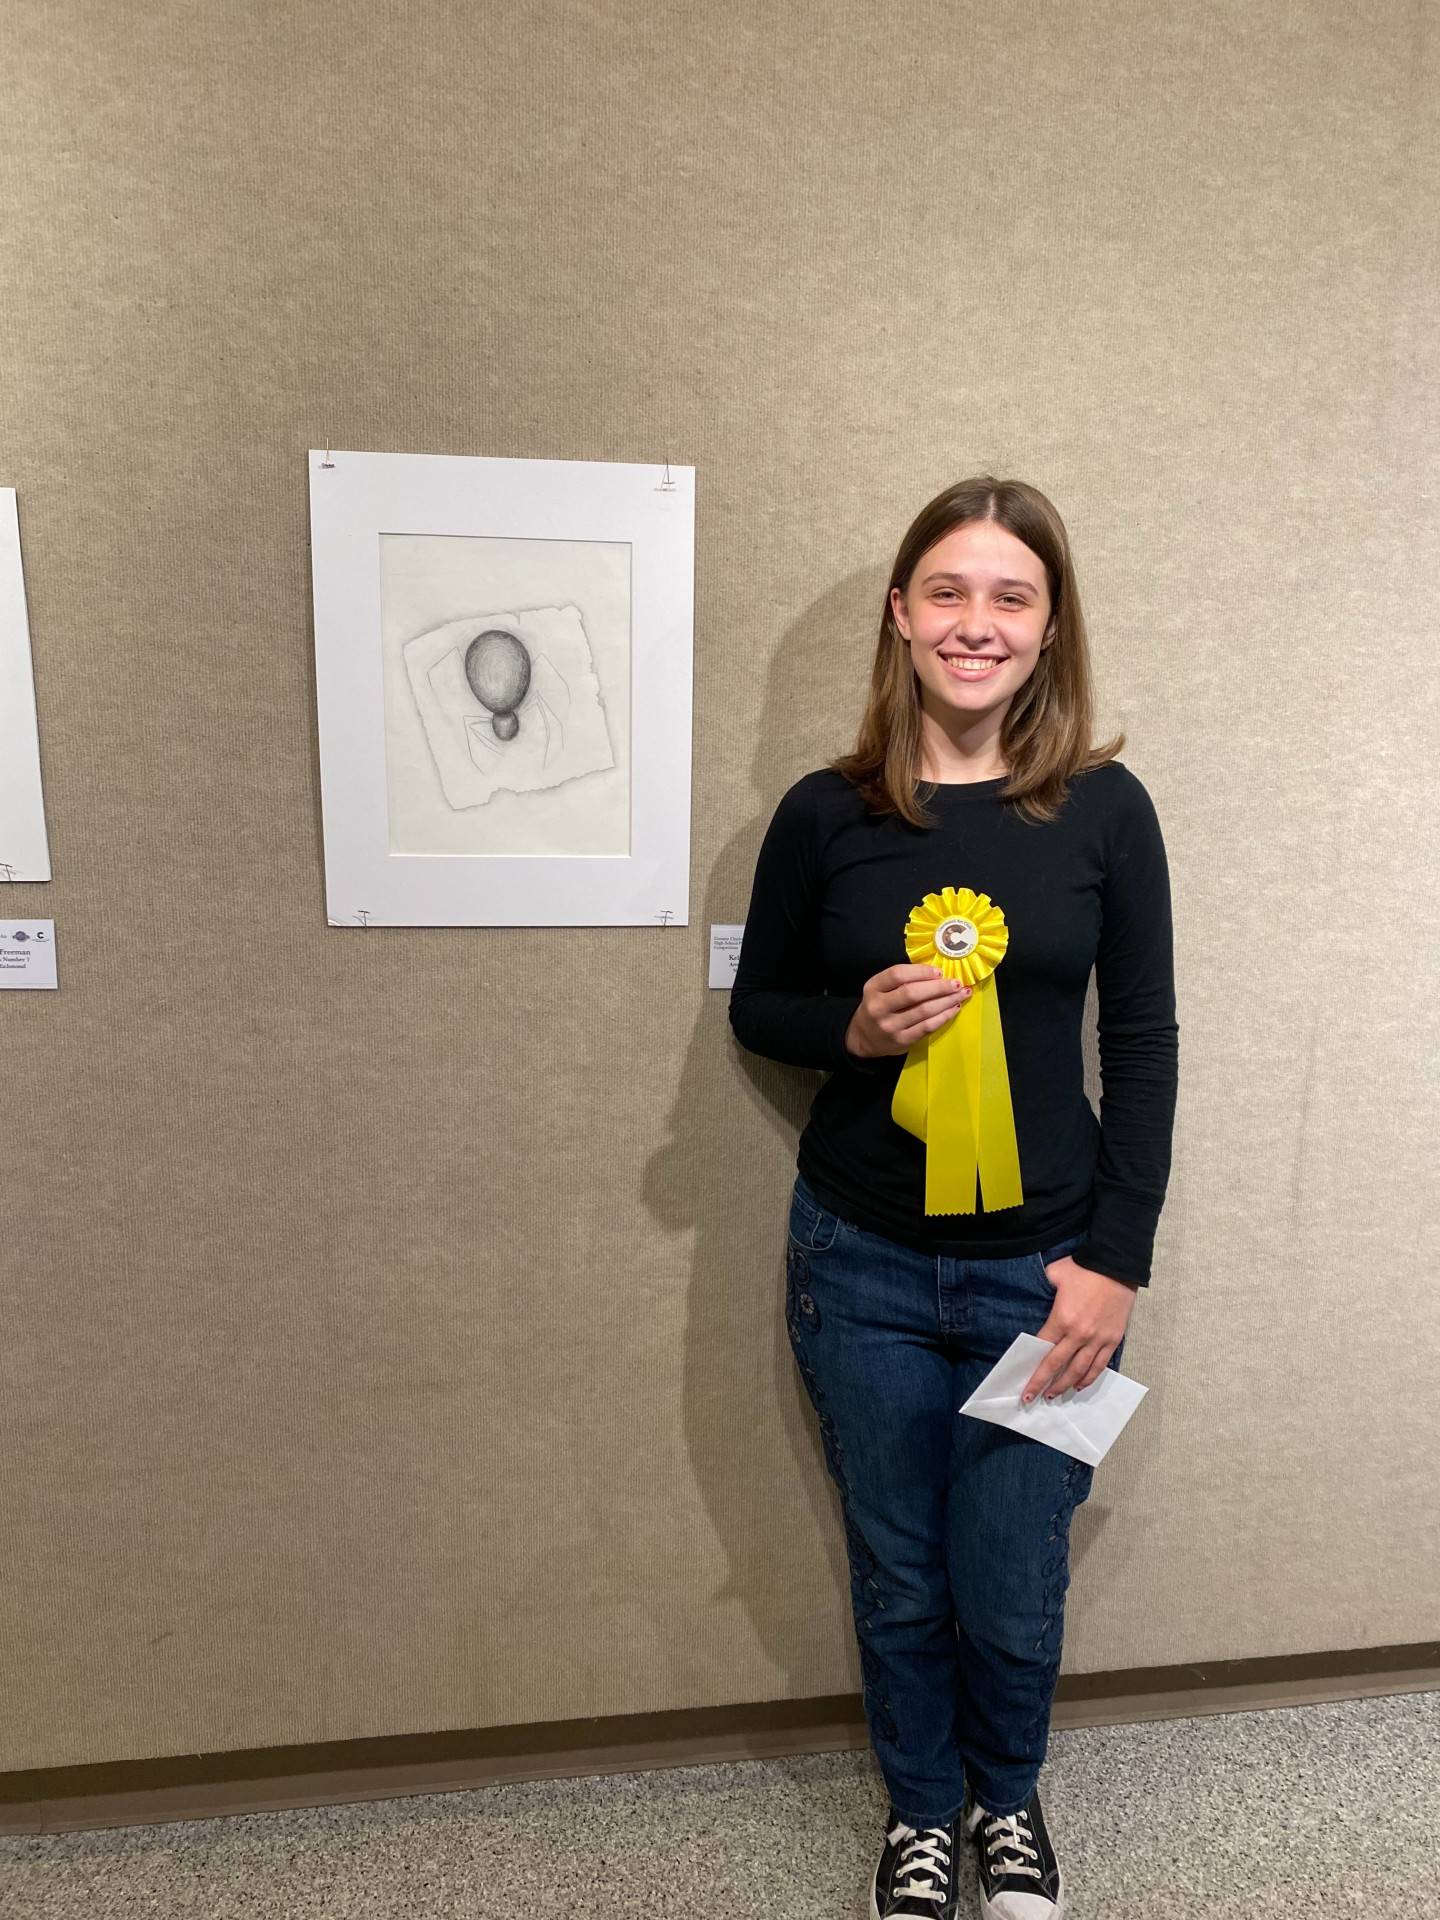 Art Award Winner with her ribbon and artwork